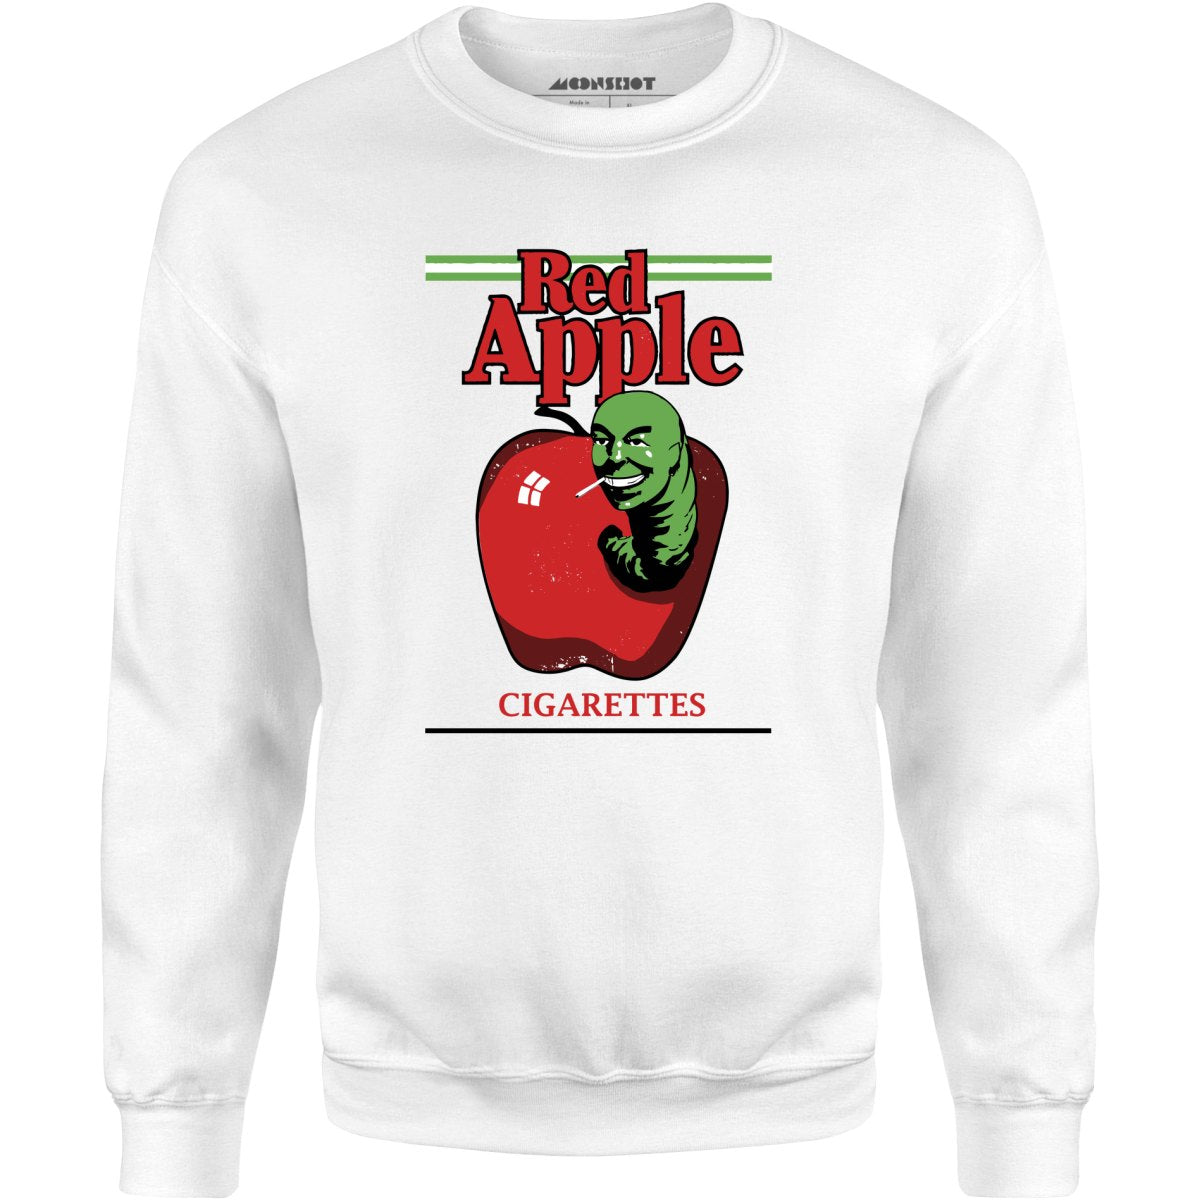 Red Apple Cigarettes - Unisex Sweatshirt